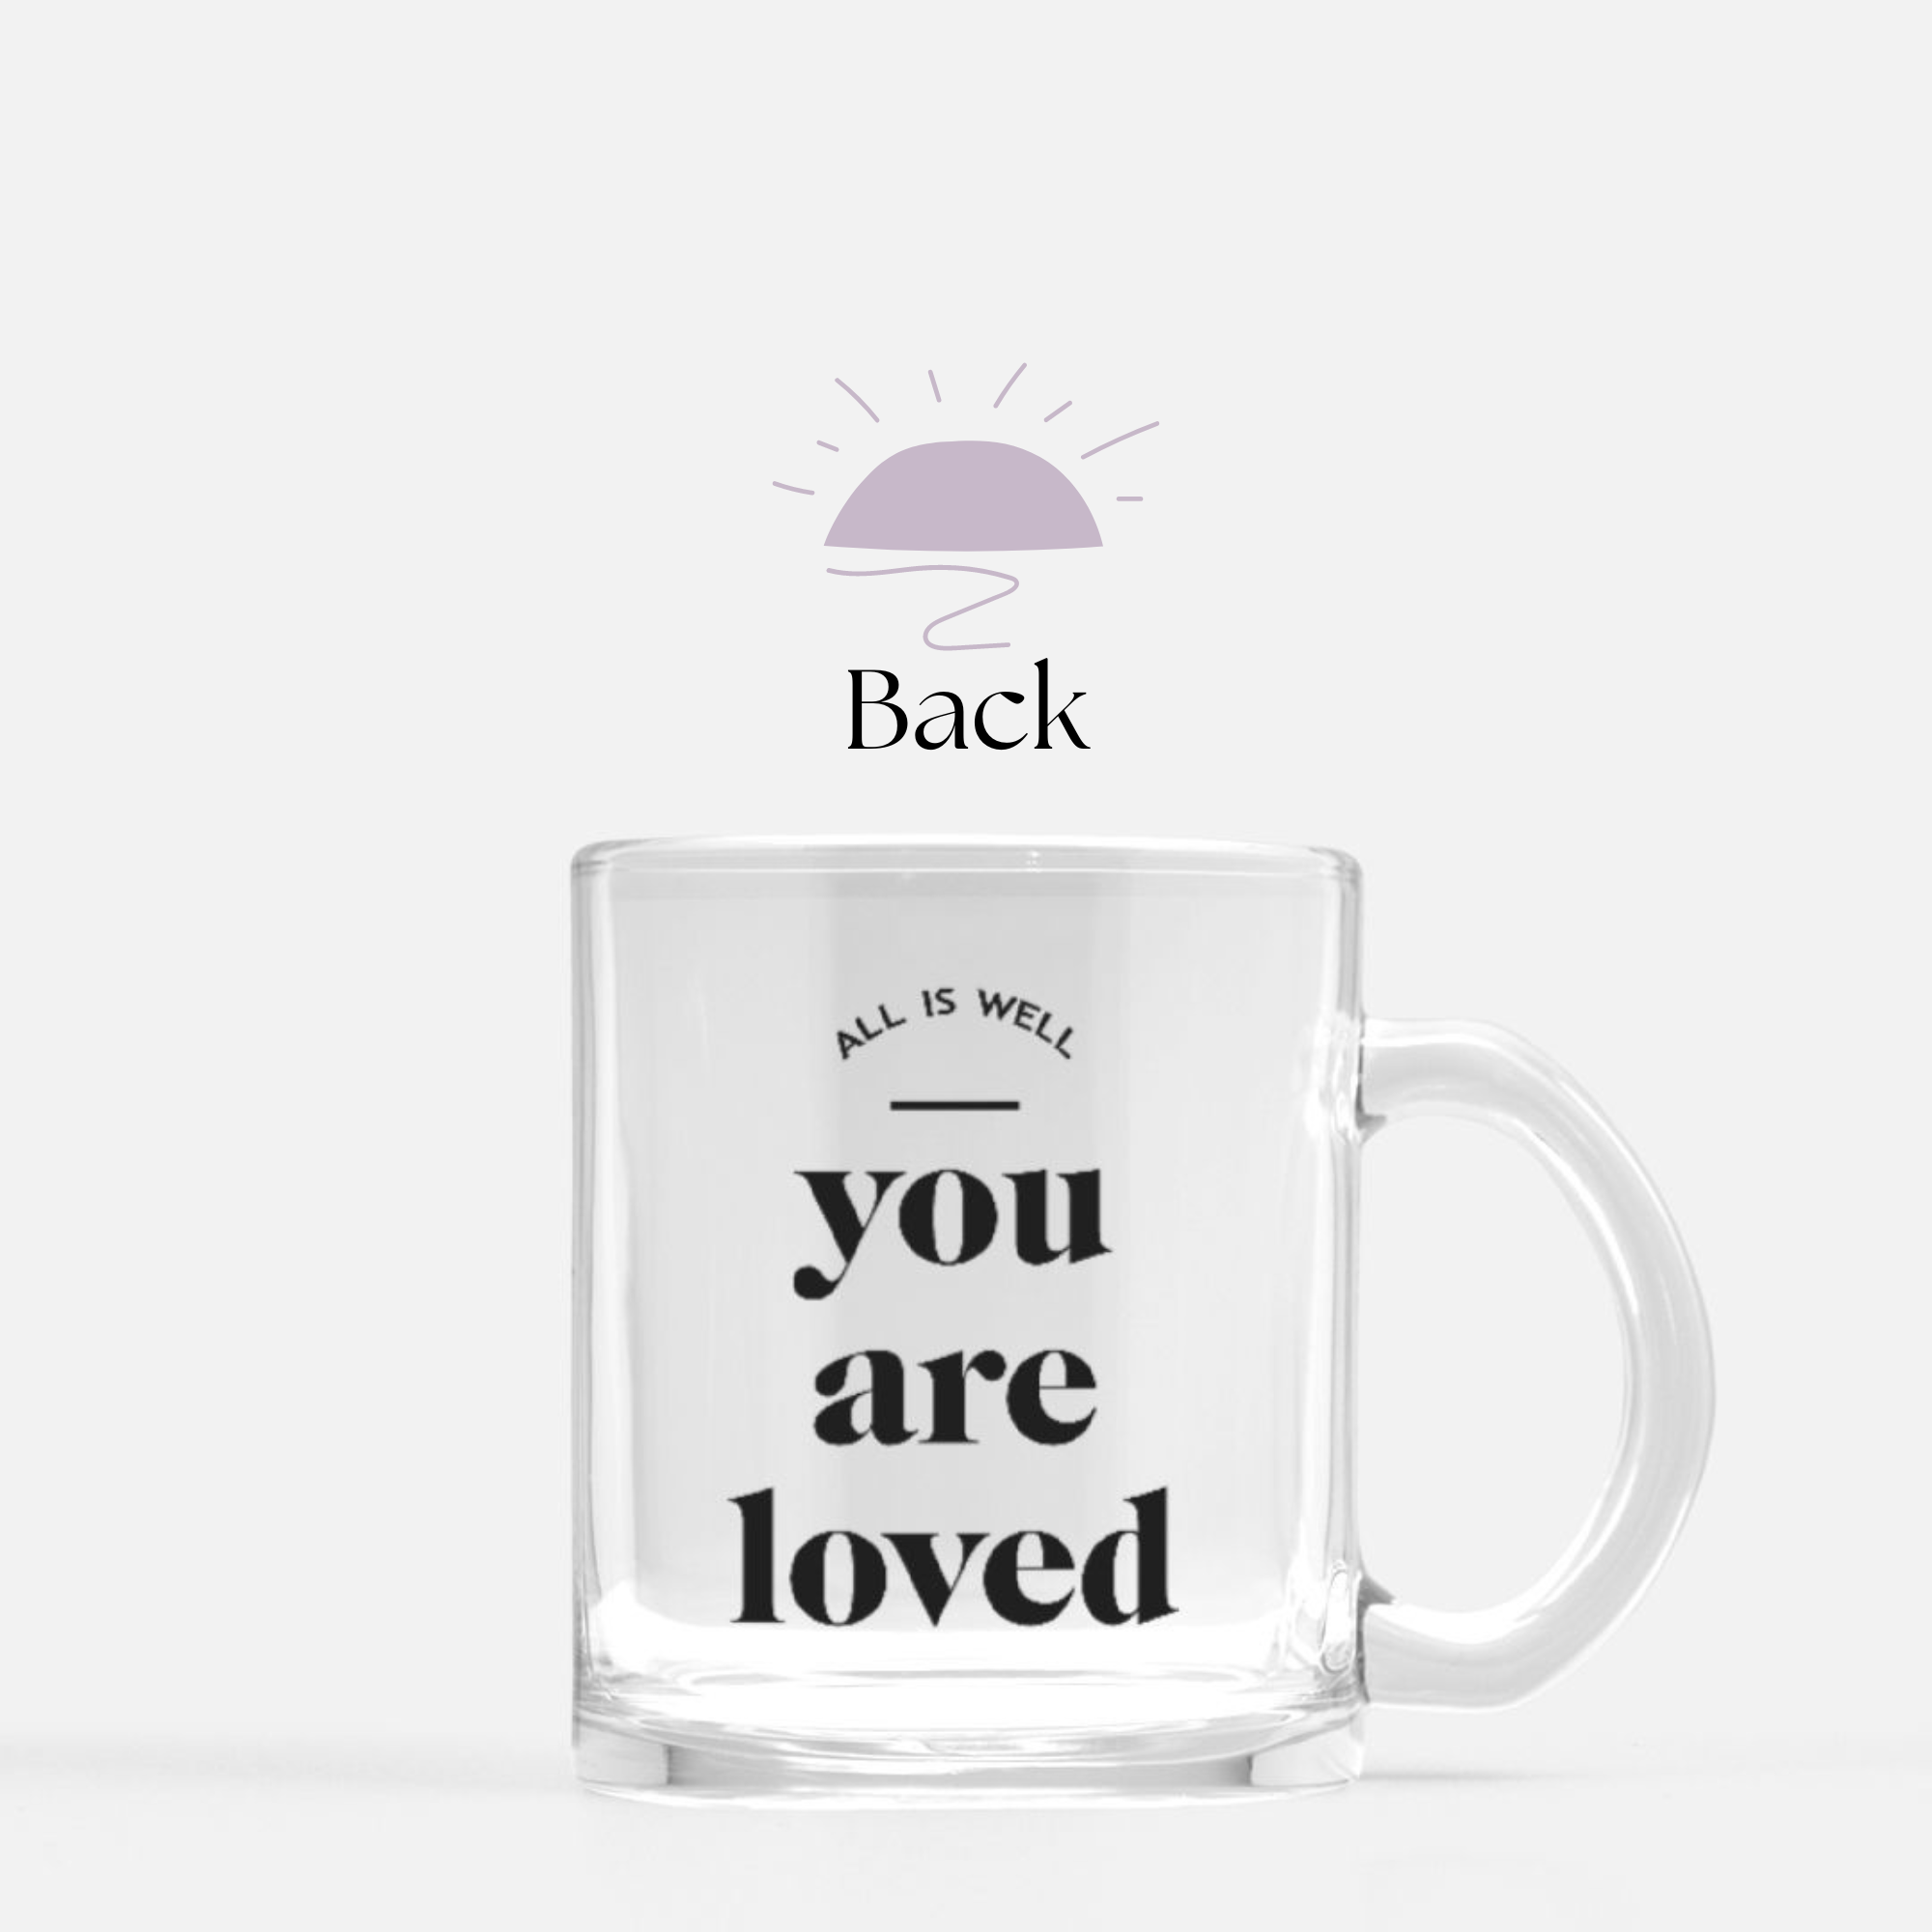 You are loved glass mug back